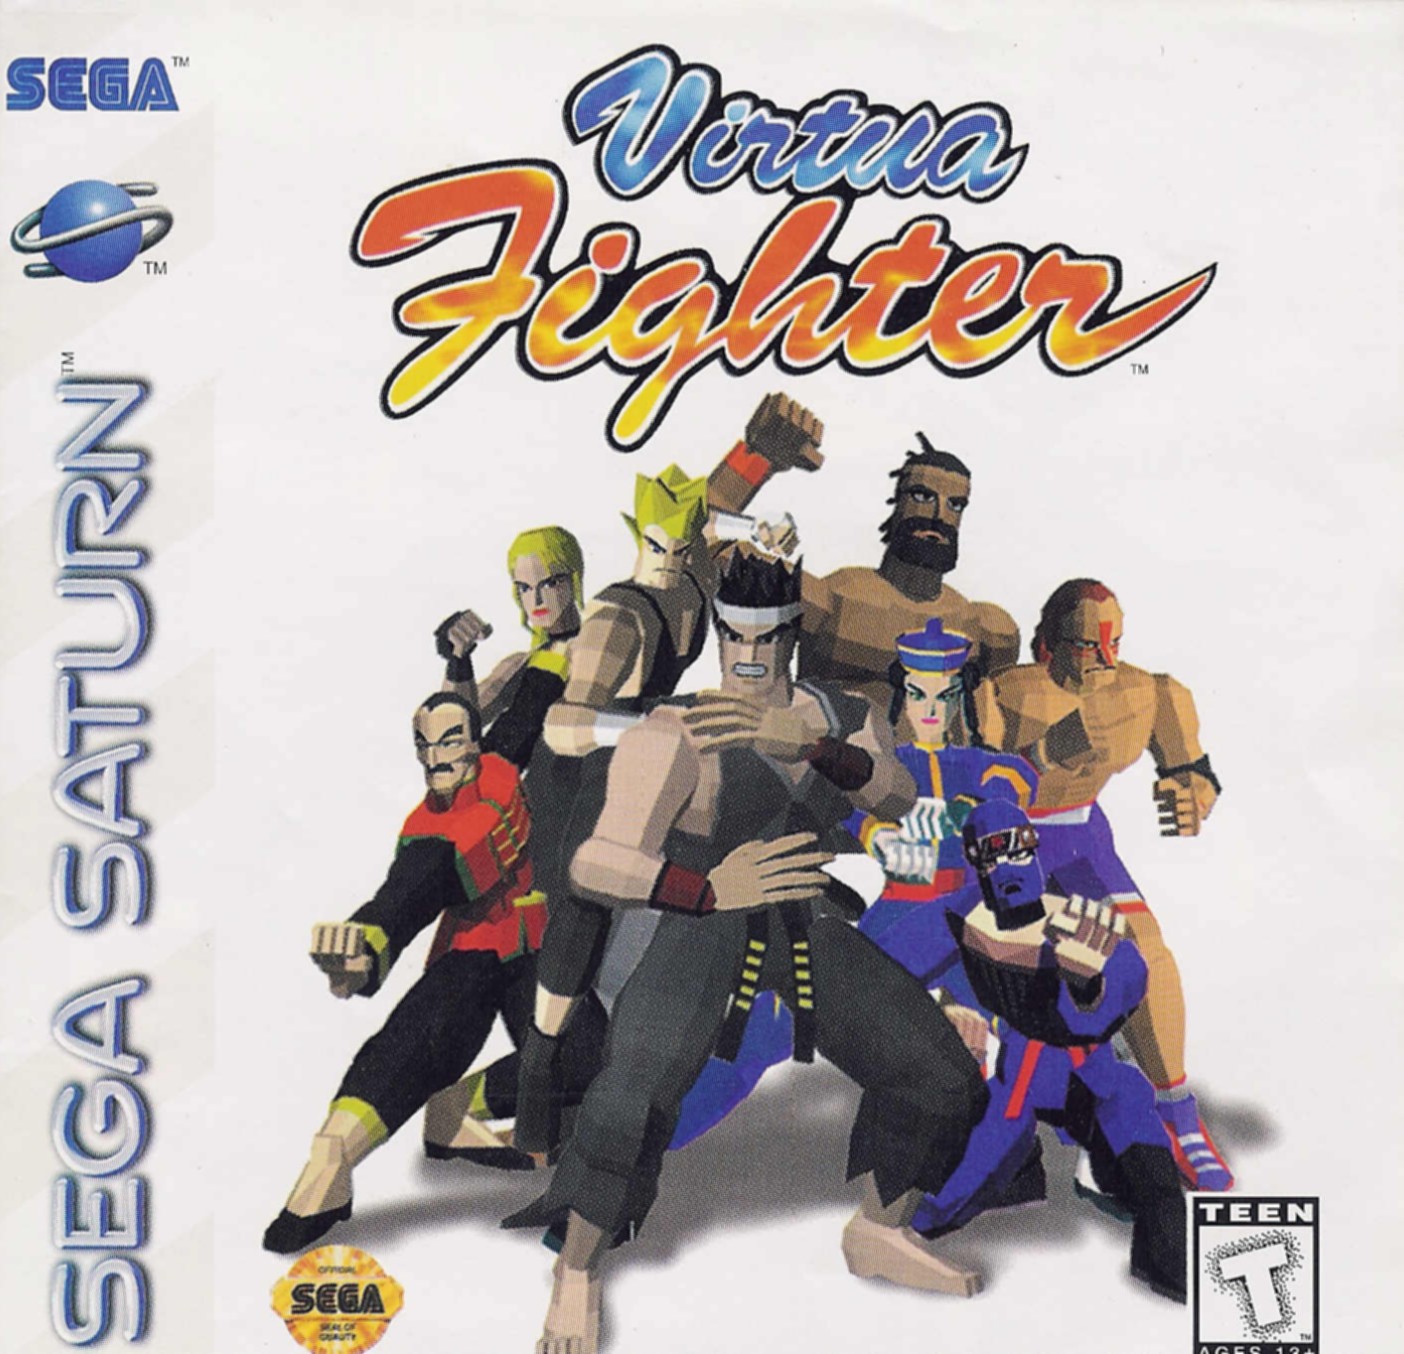 jaquette du jeu vidéo Virtua Fighter